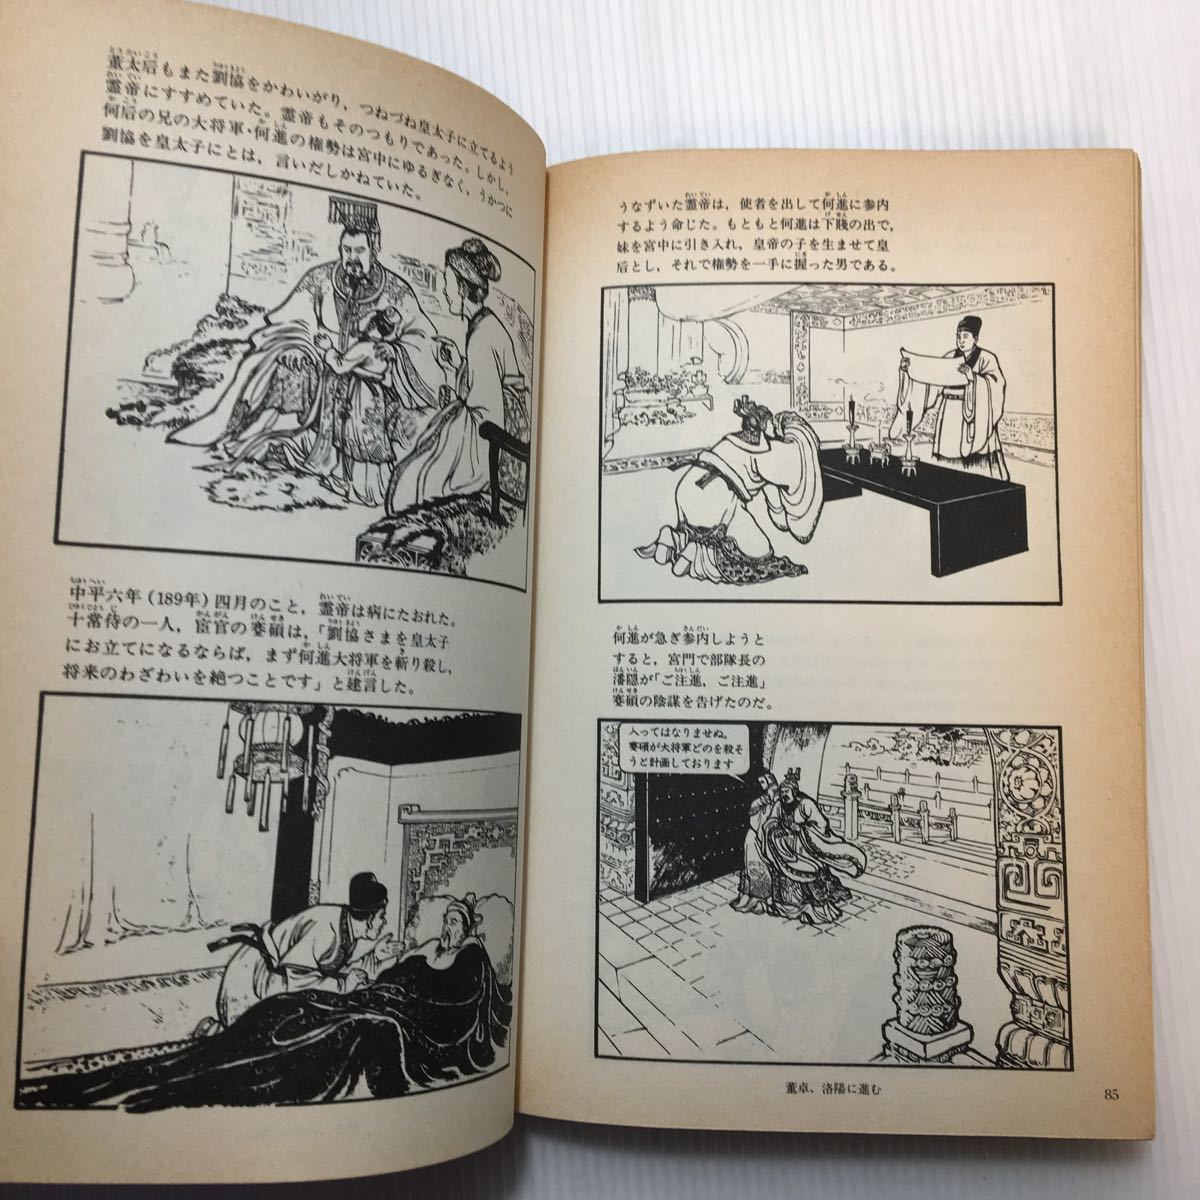 zaa-133!.книга@ Annals of Three Kingdoms ( no. 1 шт ) (1982 год ) - старинная книга, 1982/8/1 Chin Shunshin (. перевод ) центр . теория фирма 